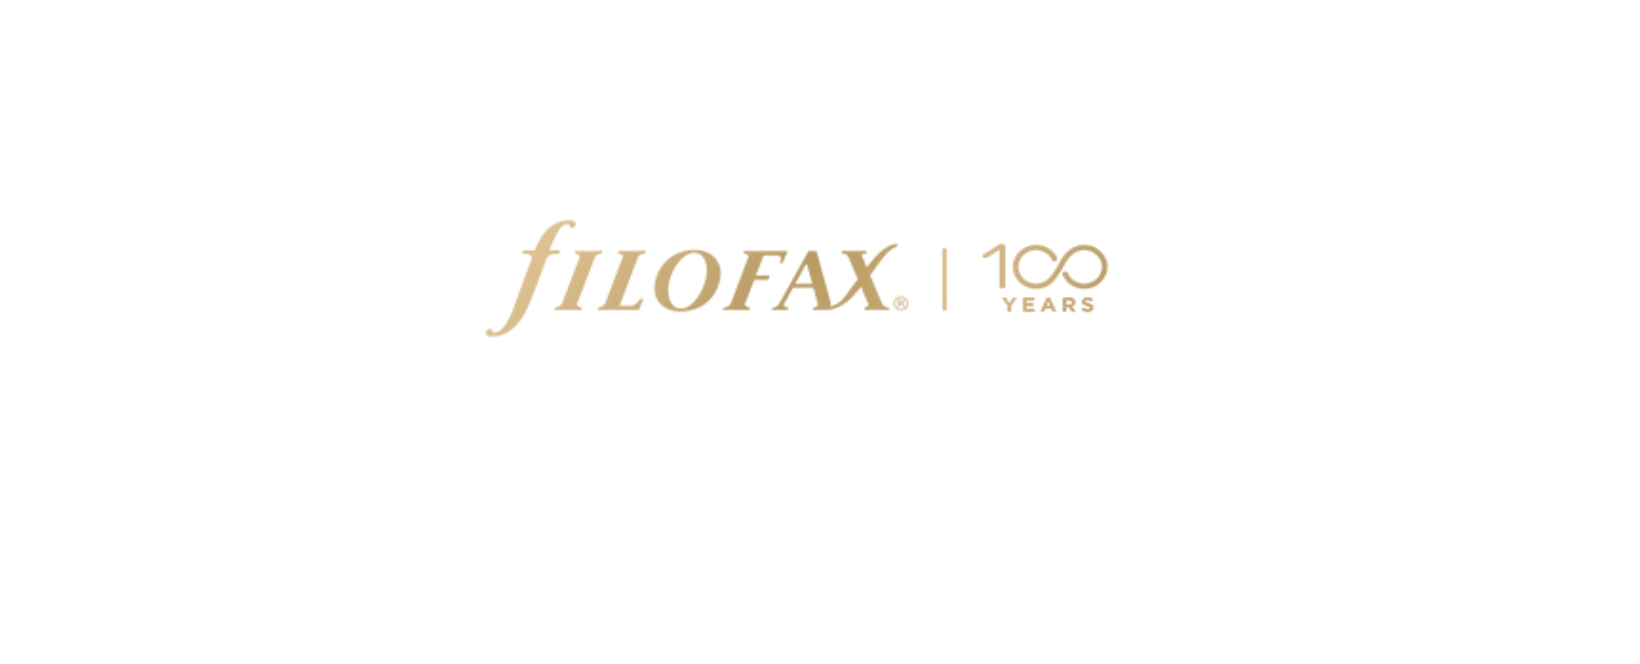 Filofax UK Discount Code 2022